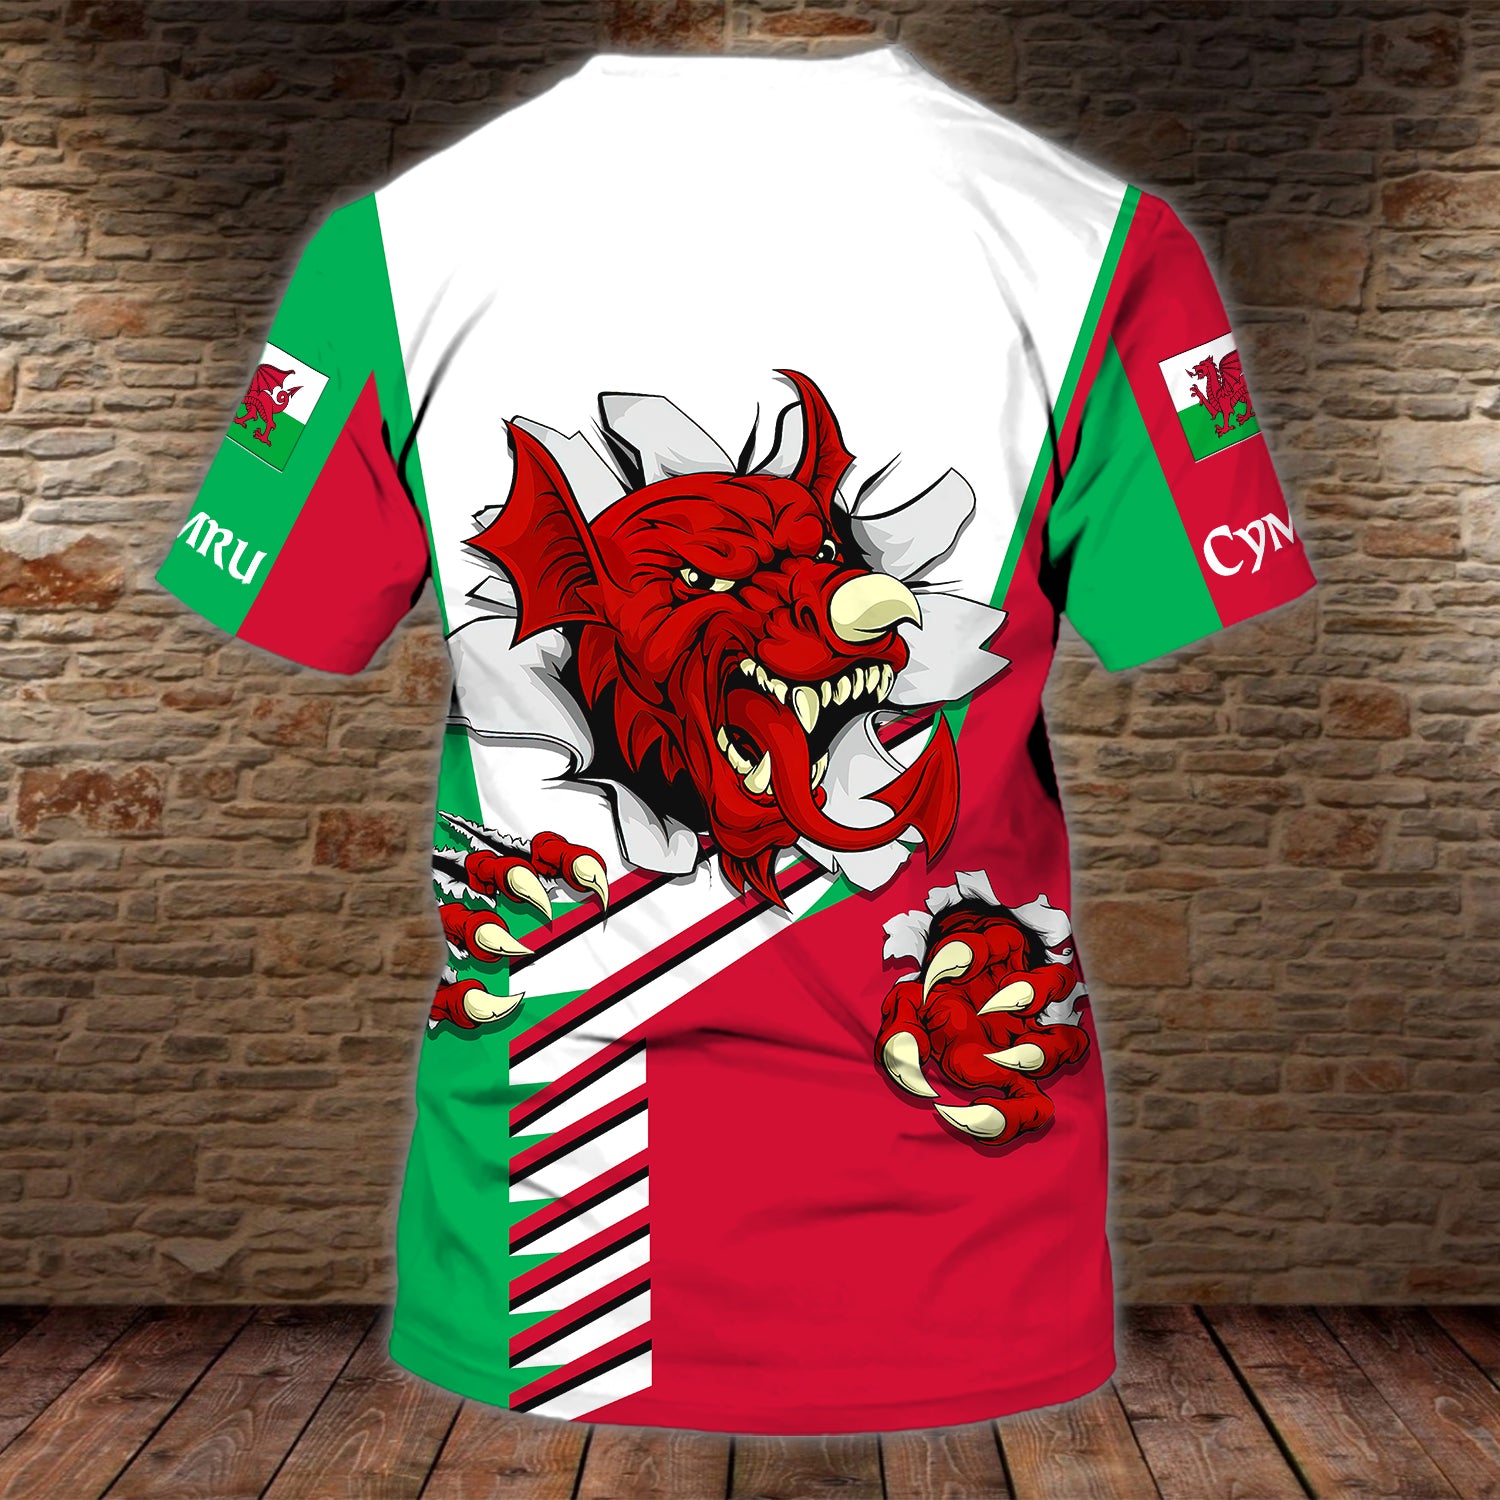 Wales - Cymru 063 - Cymru - Personalized Name 3D Tshirt - DAT93